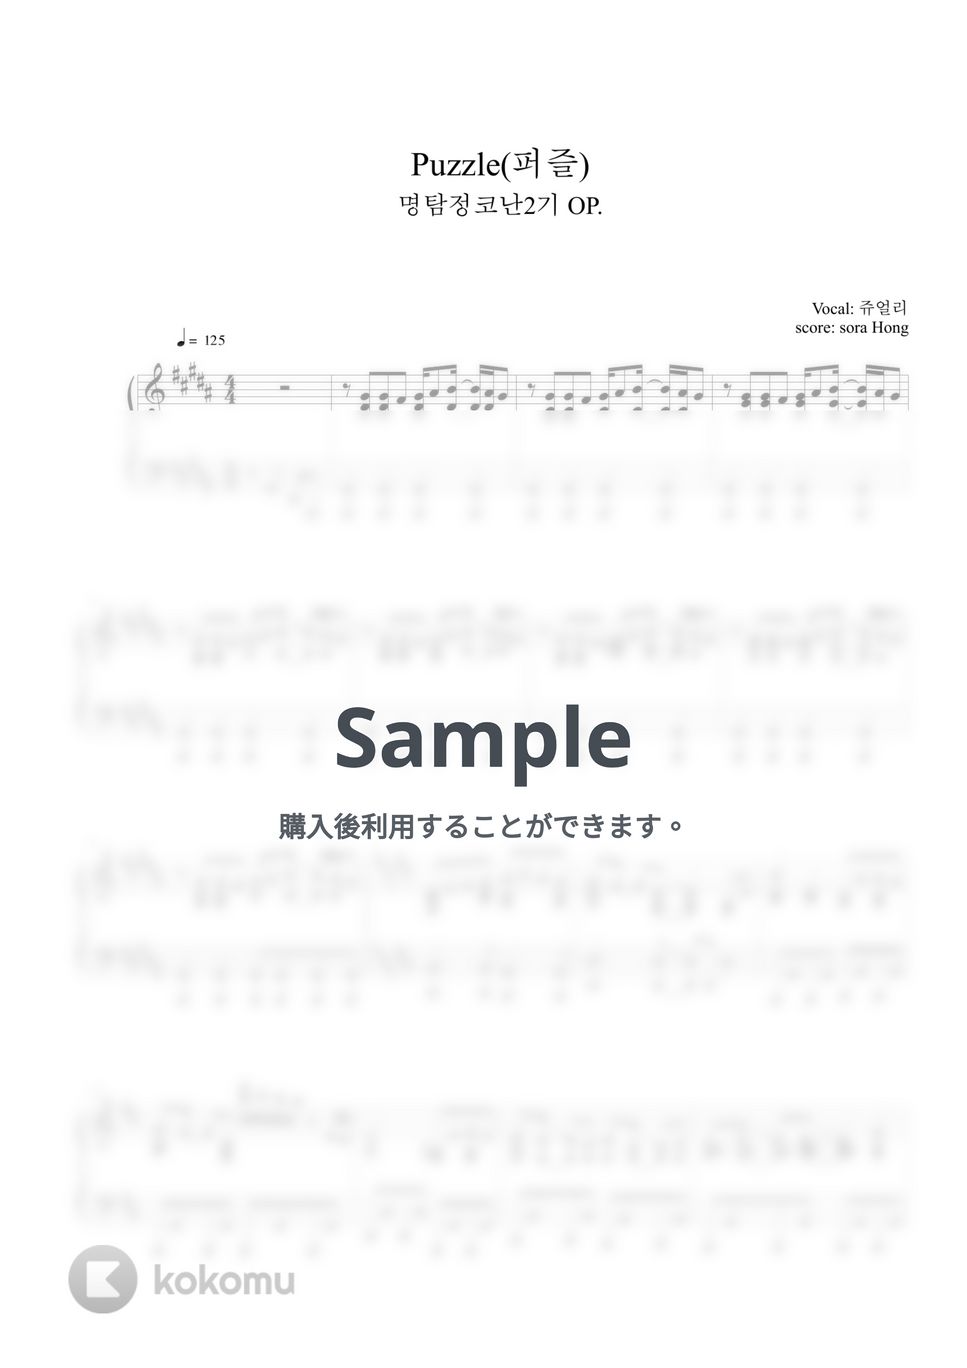 Detective Conan OST - Puzzle(Nazo) (謎) by sora Hong